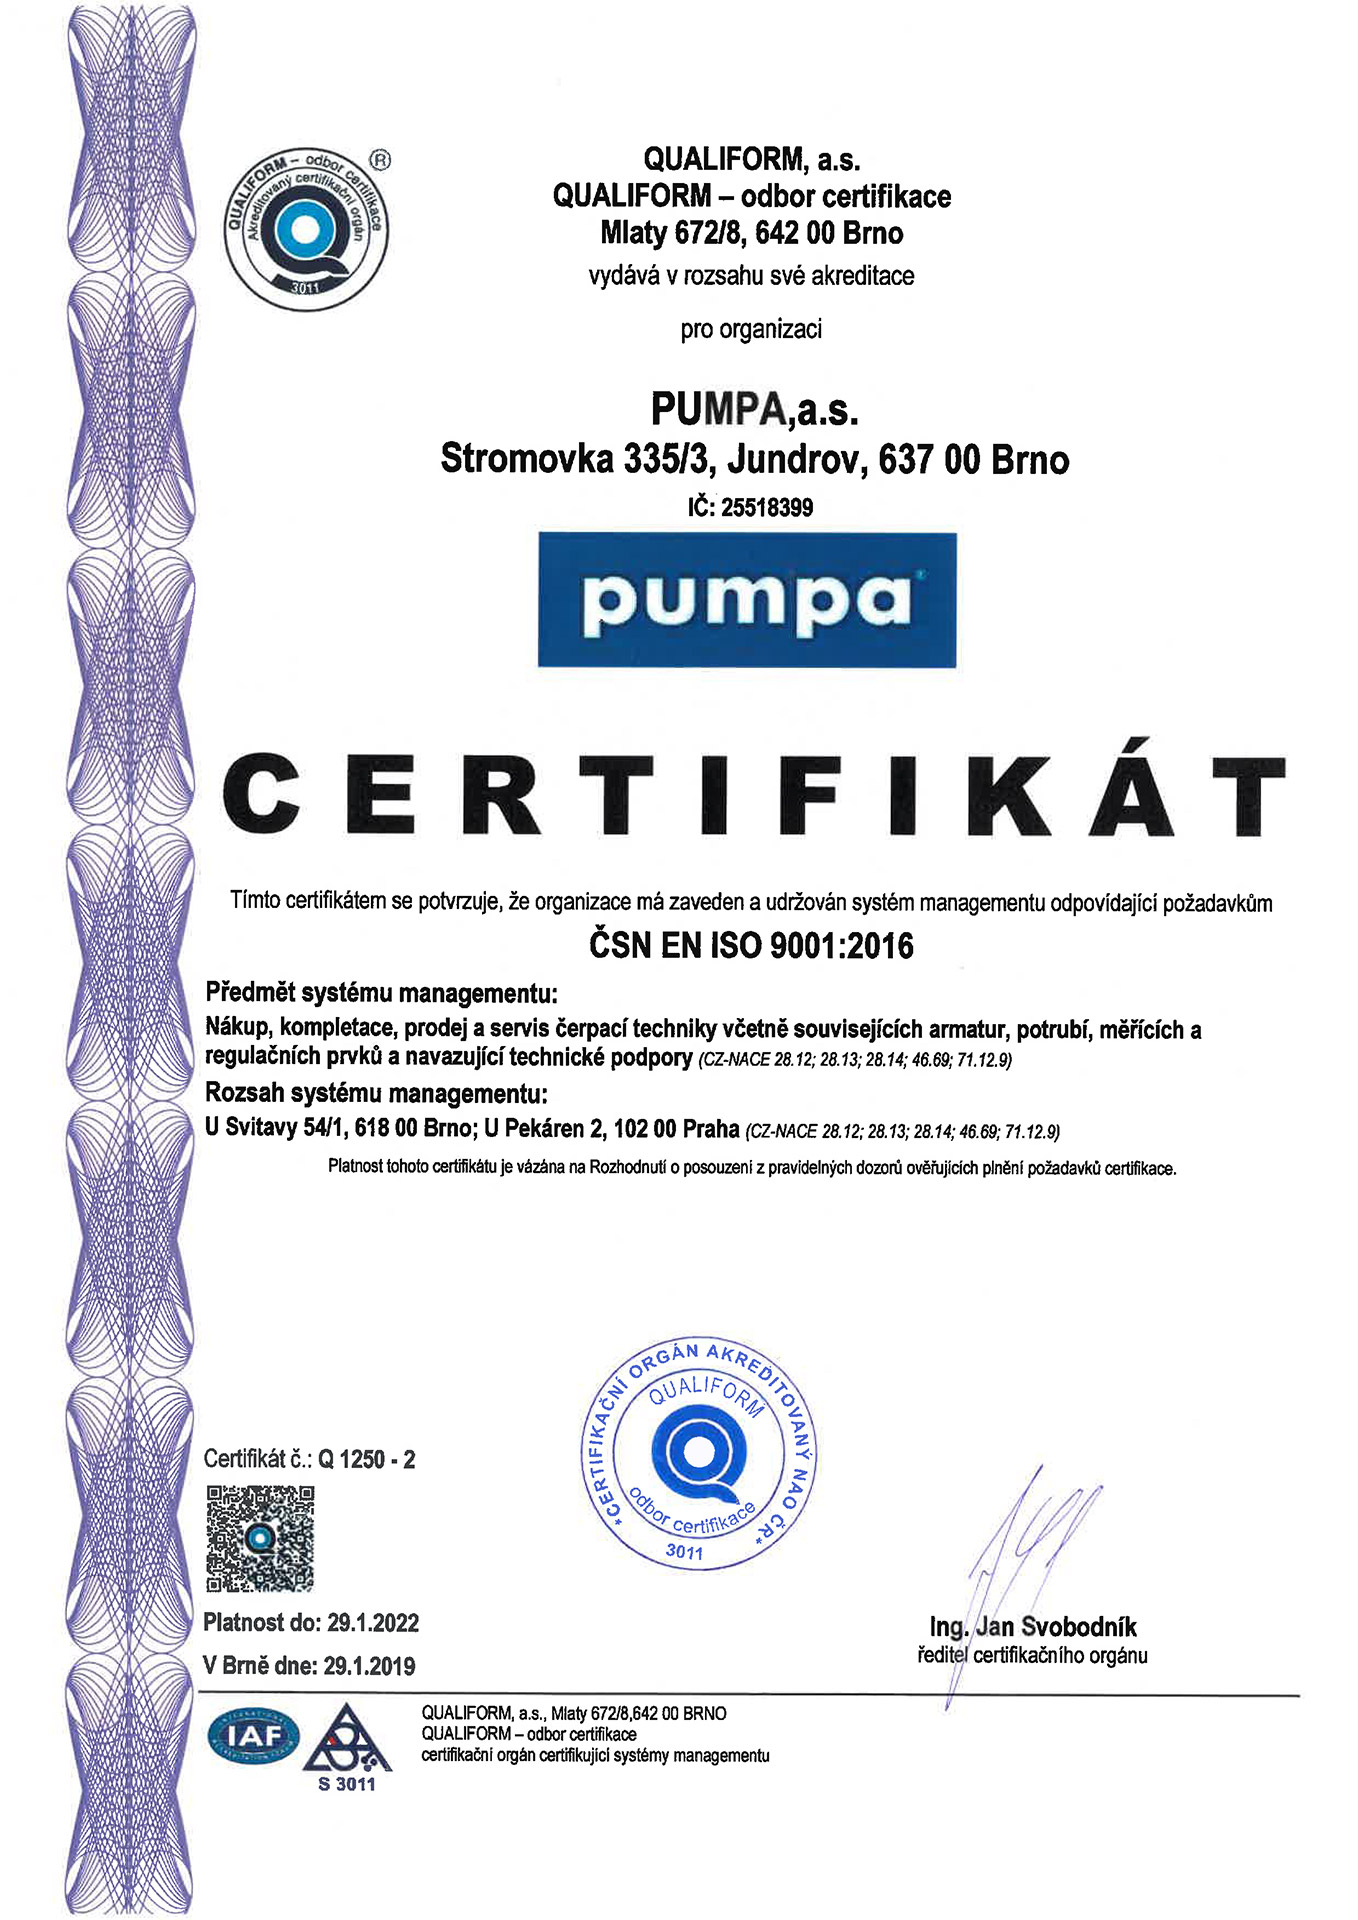 Certifikát ISO pro firmu Pumpa.